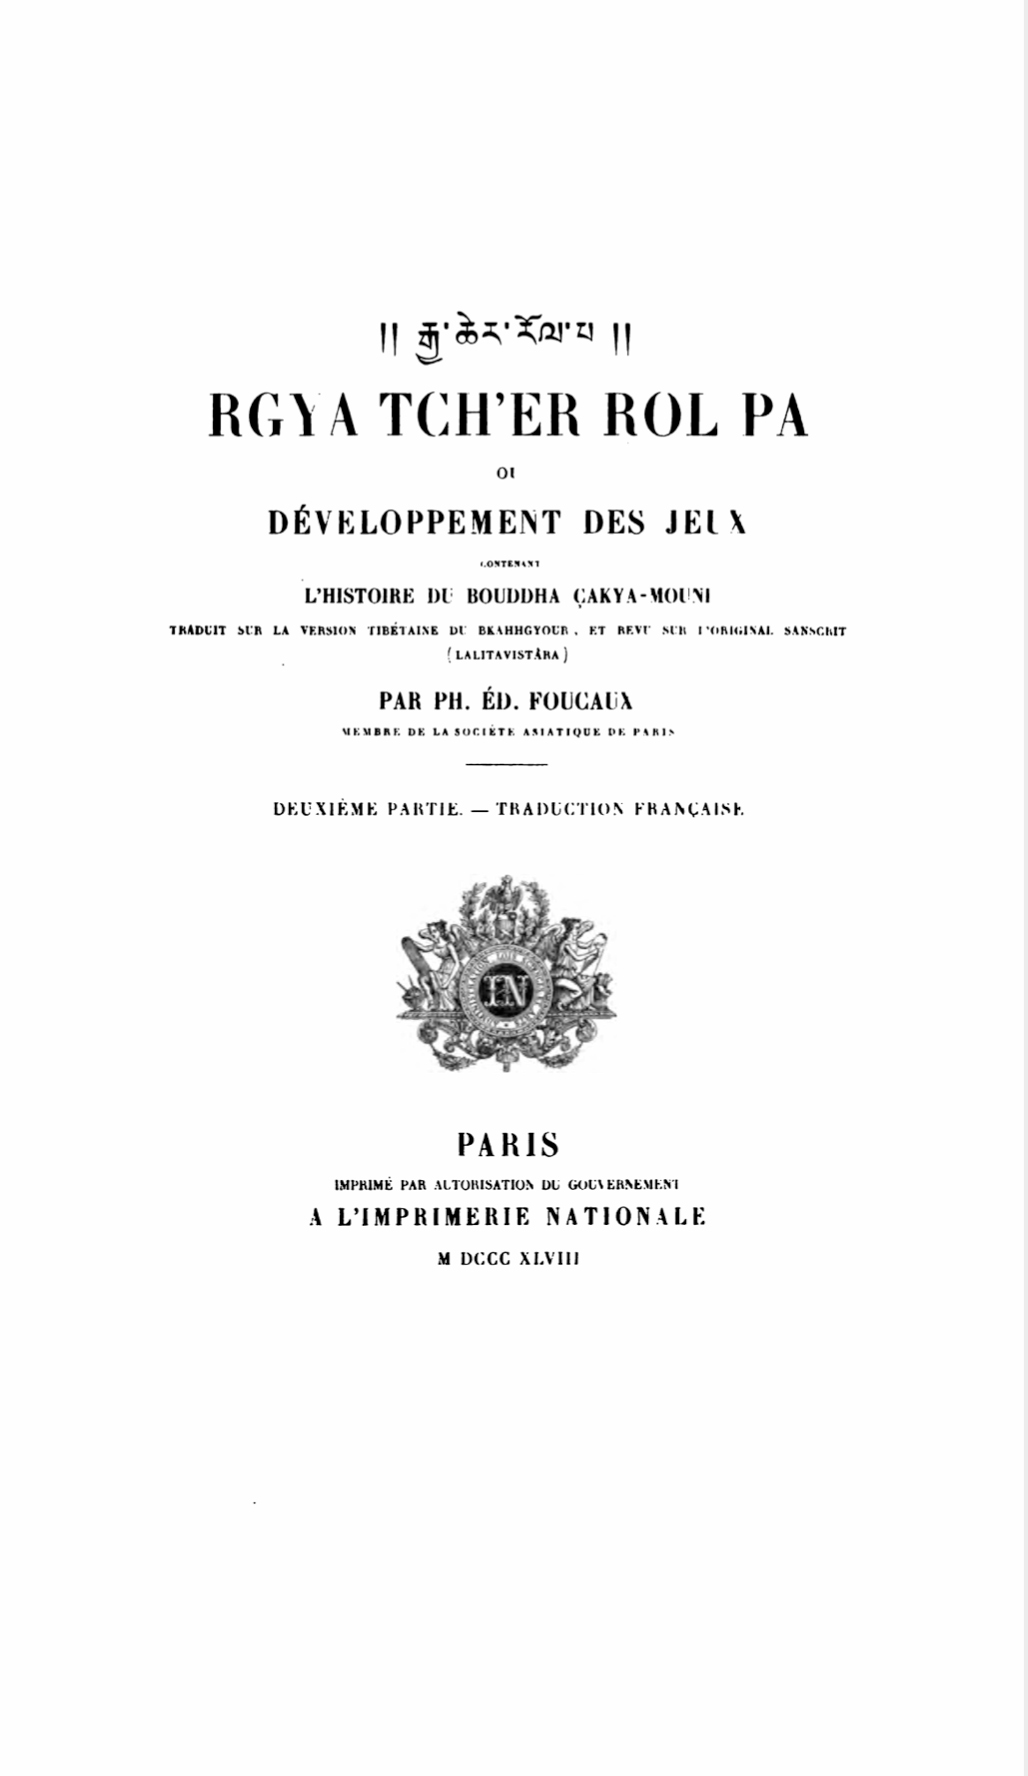 Rgya tcher rol pa Foucaux 1848-front.jpg